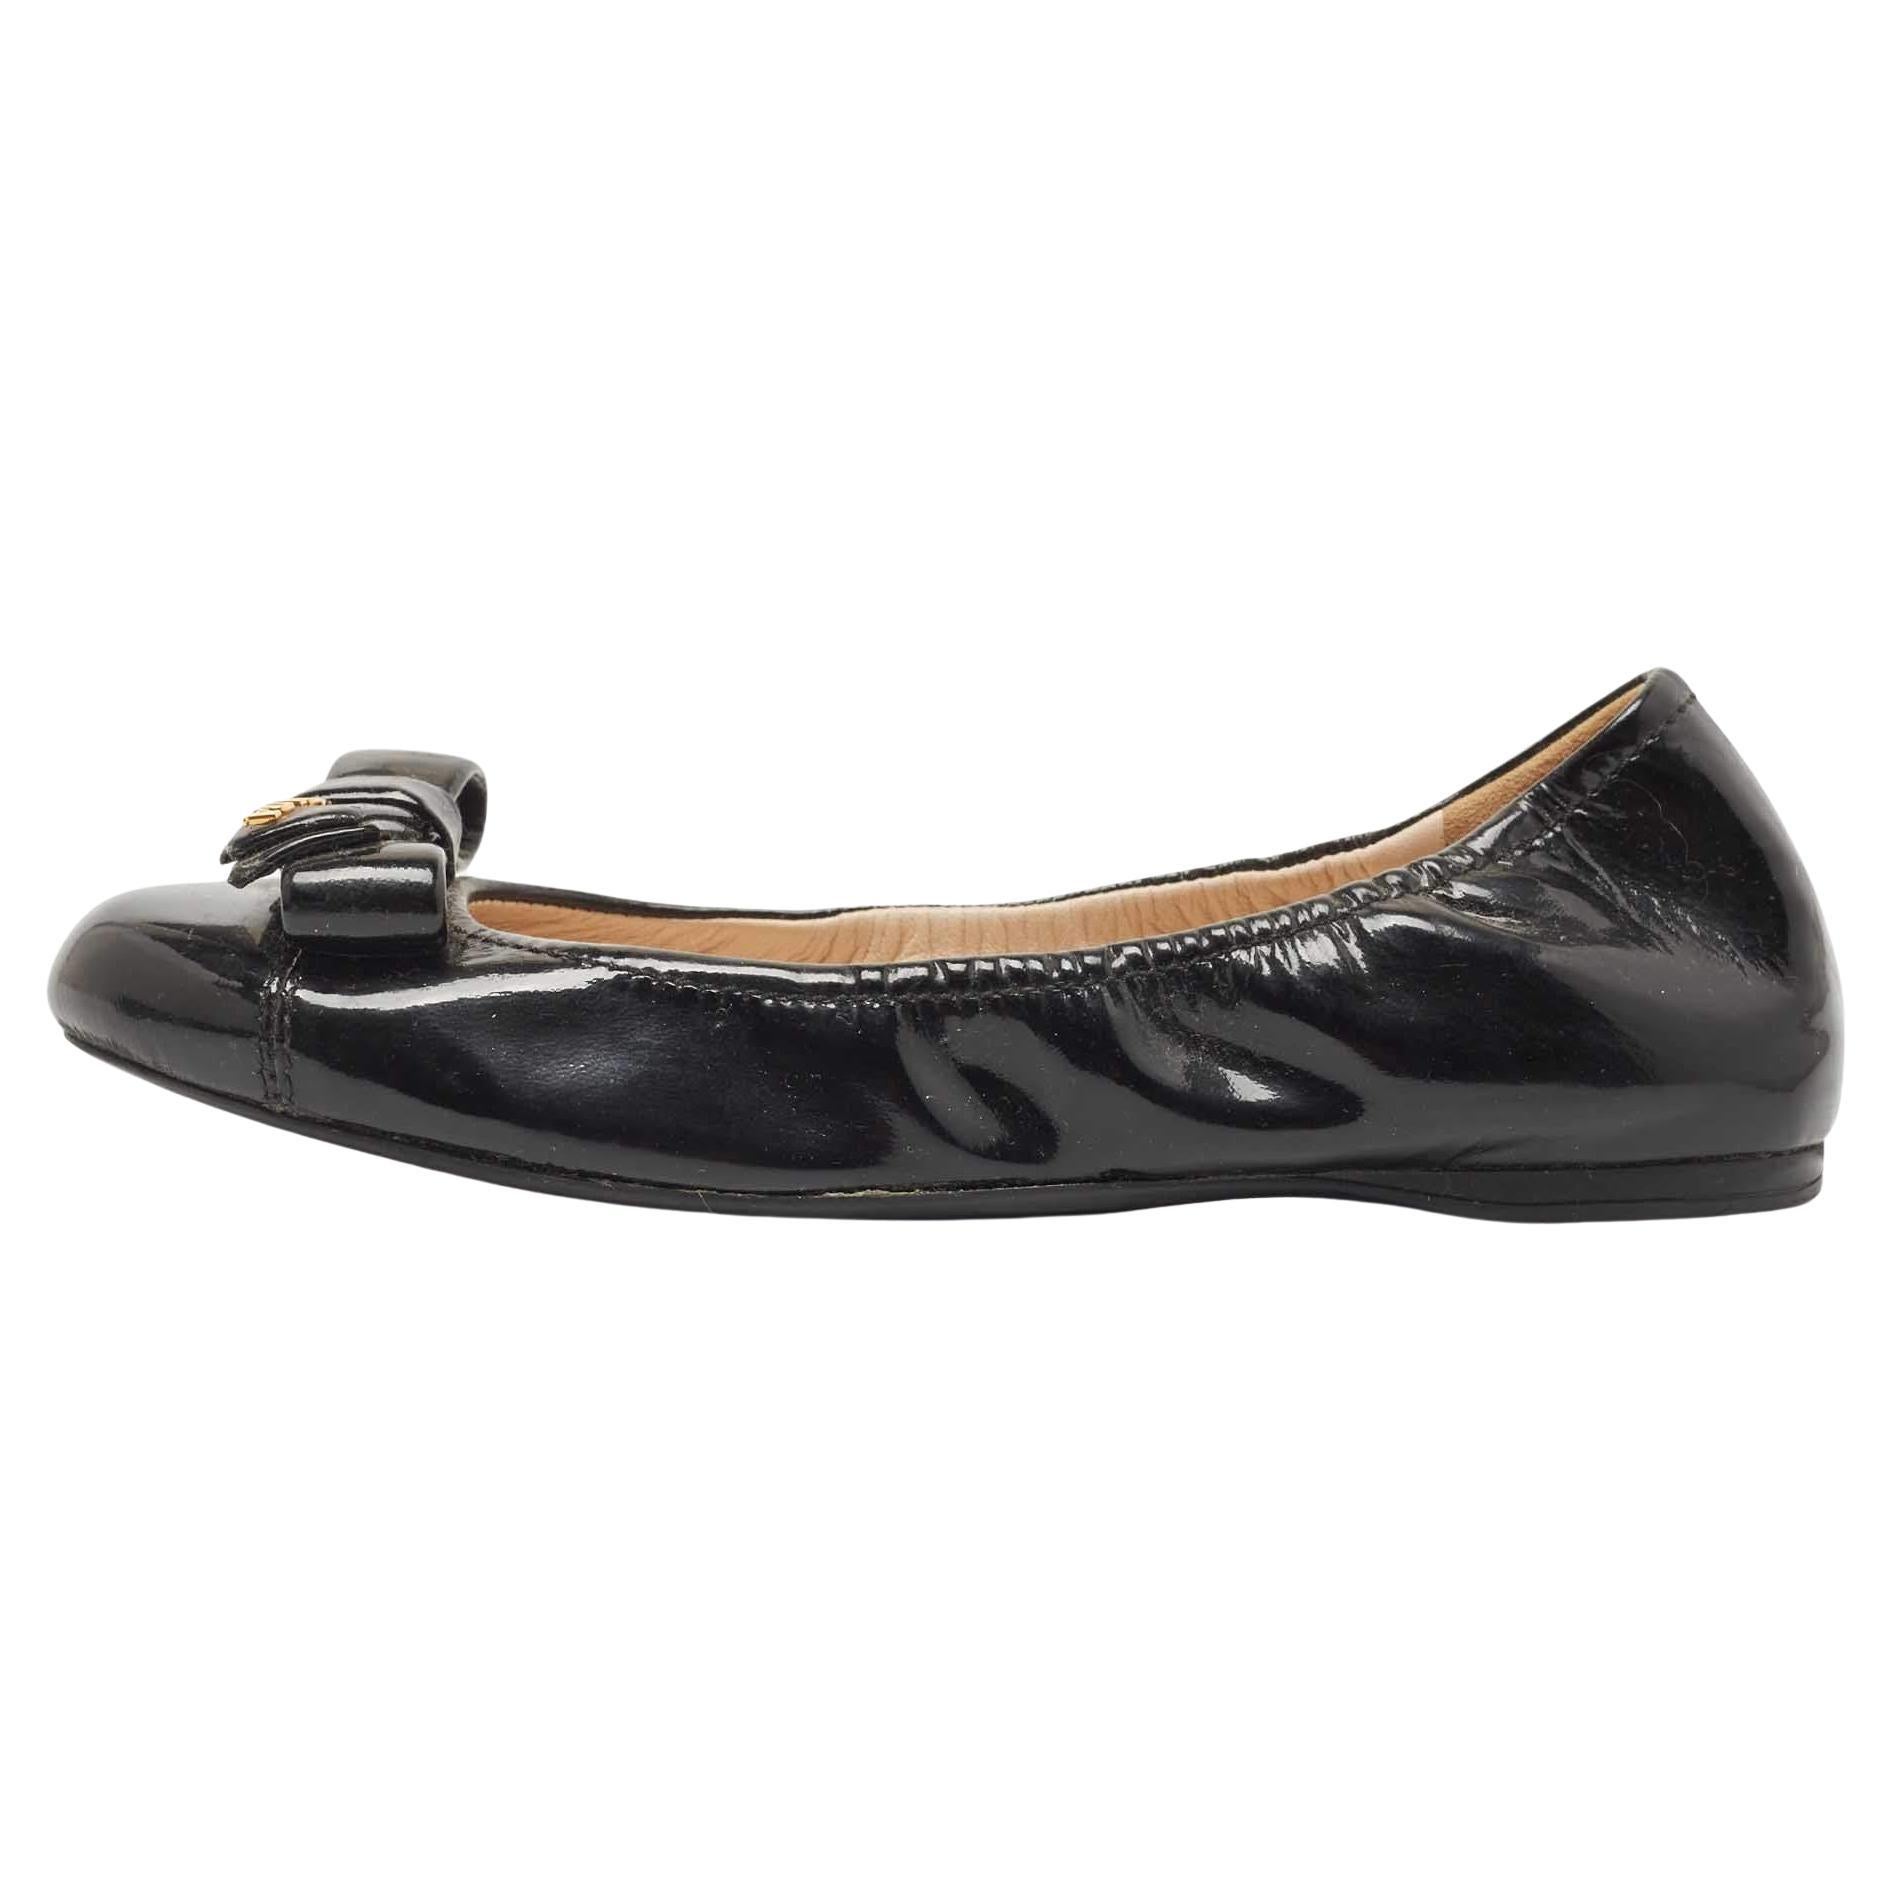 Prada Black Patent Leather Bow Detail Ballet Flats Size 36.5